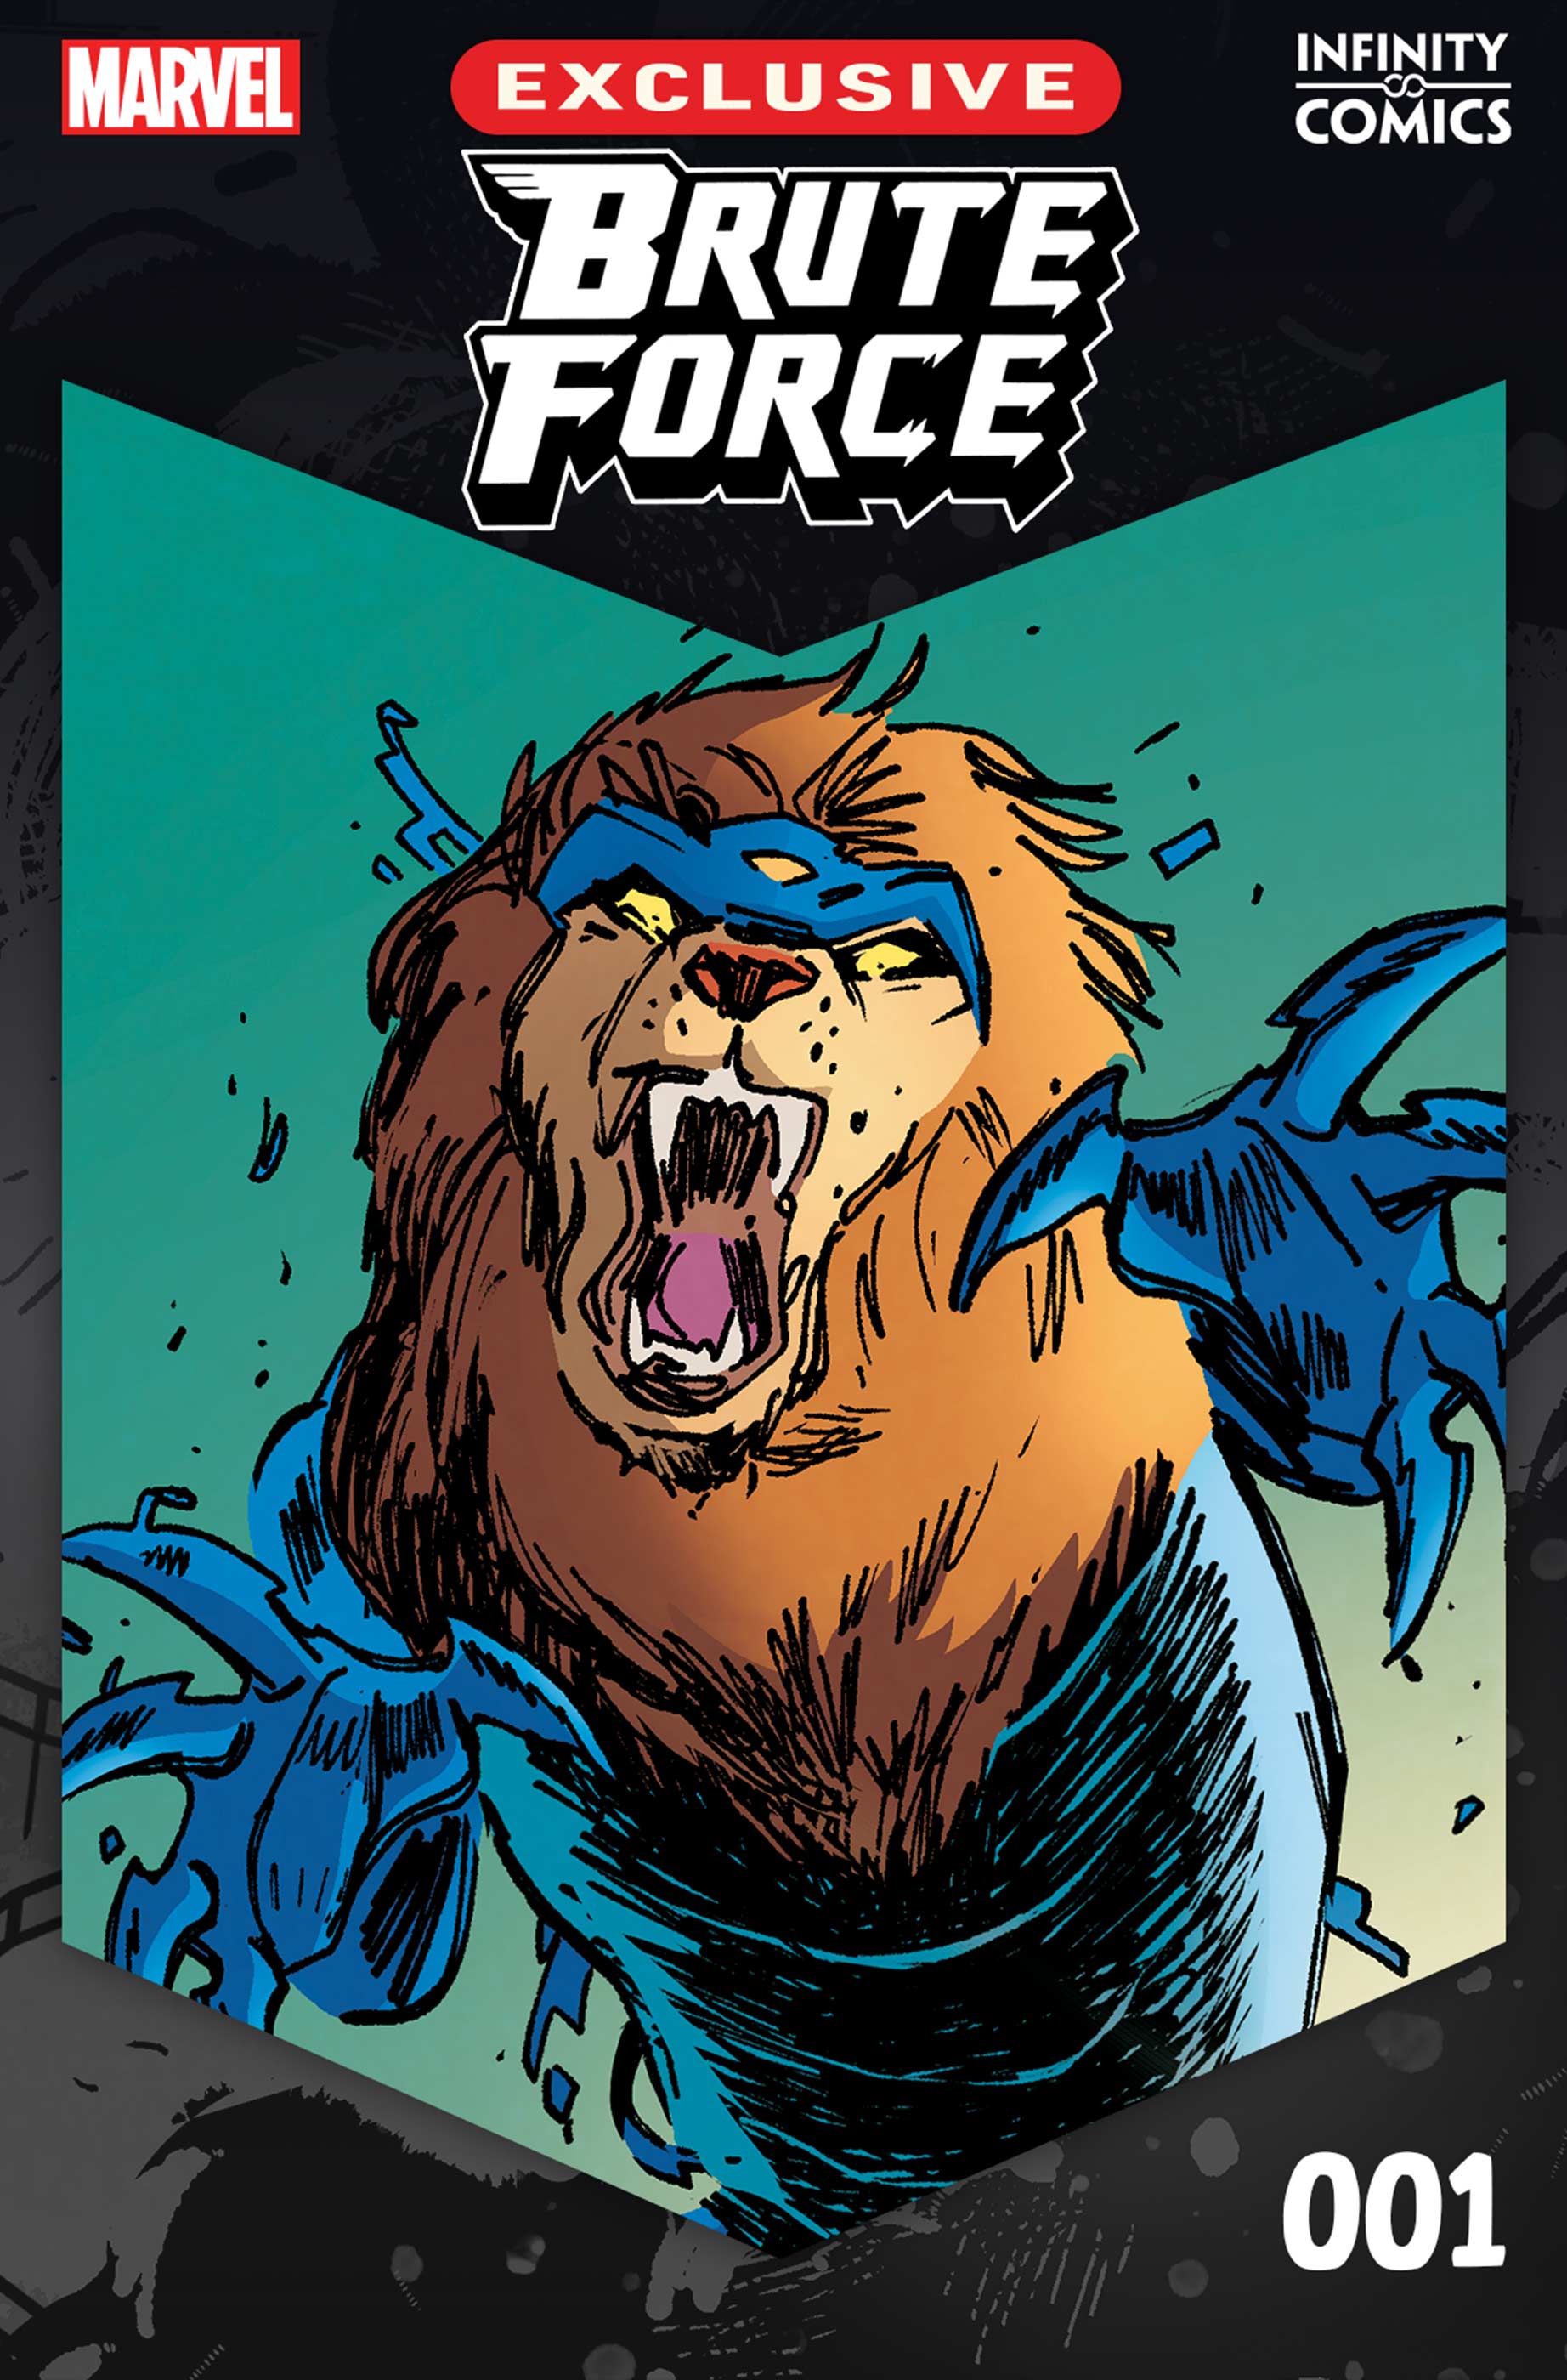 Brute Force Infinity Comic (2023) #1